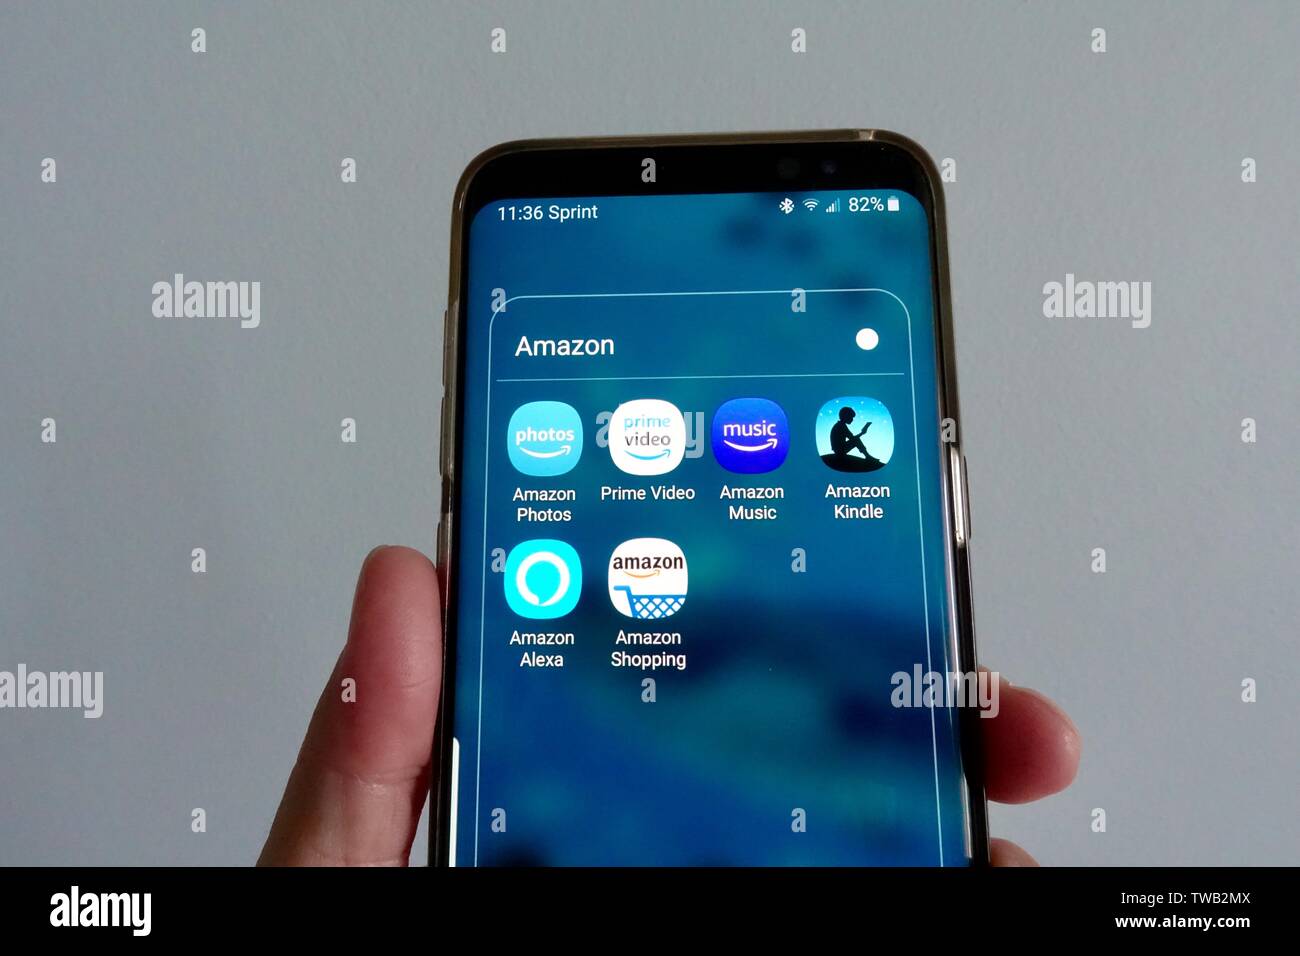 Orlando, FL/USA-6/13/19: A Samsung Galaxy Smartphone displaying the Amazon photos, prime video, music, kindle, alexa, and shopping apps. Stock Photo